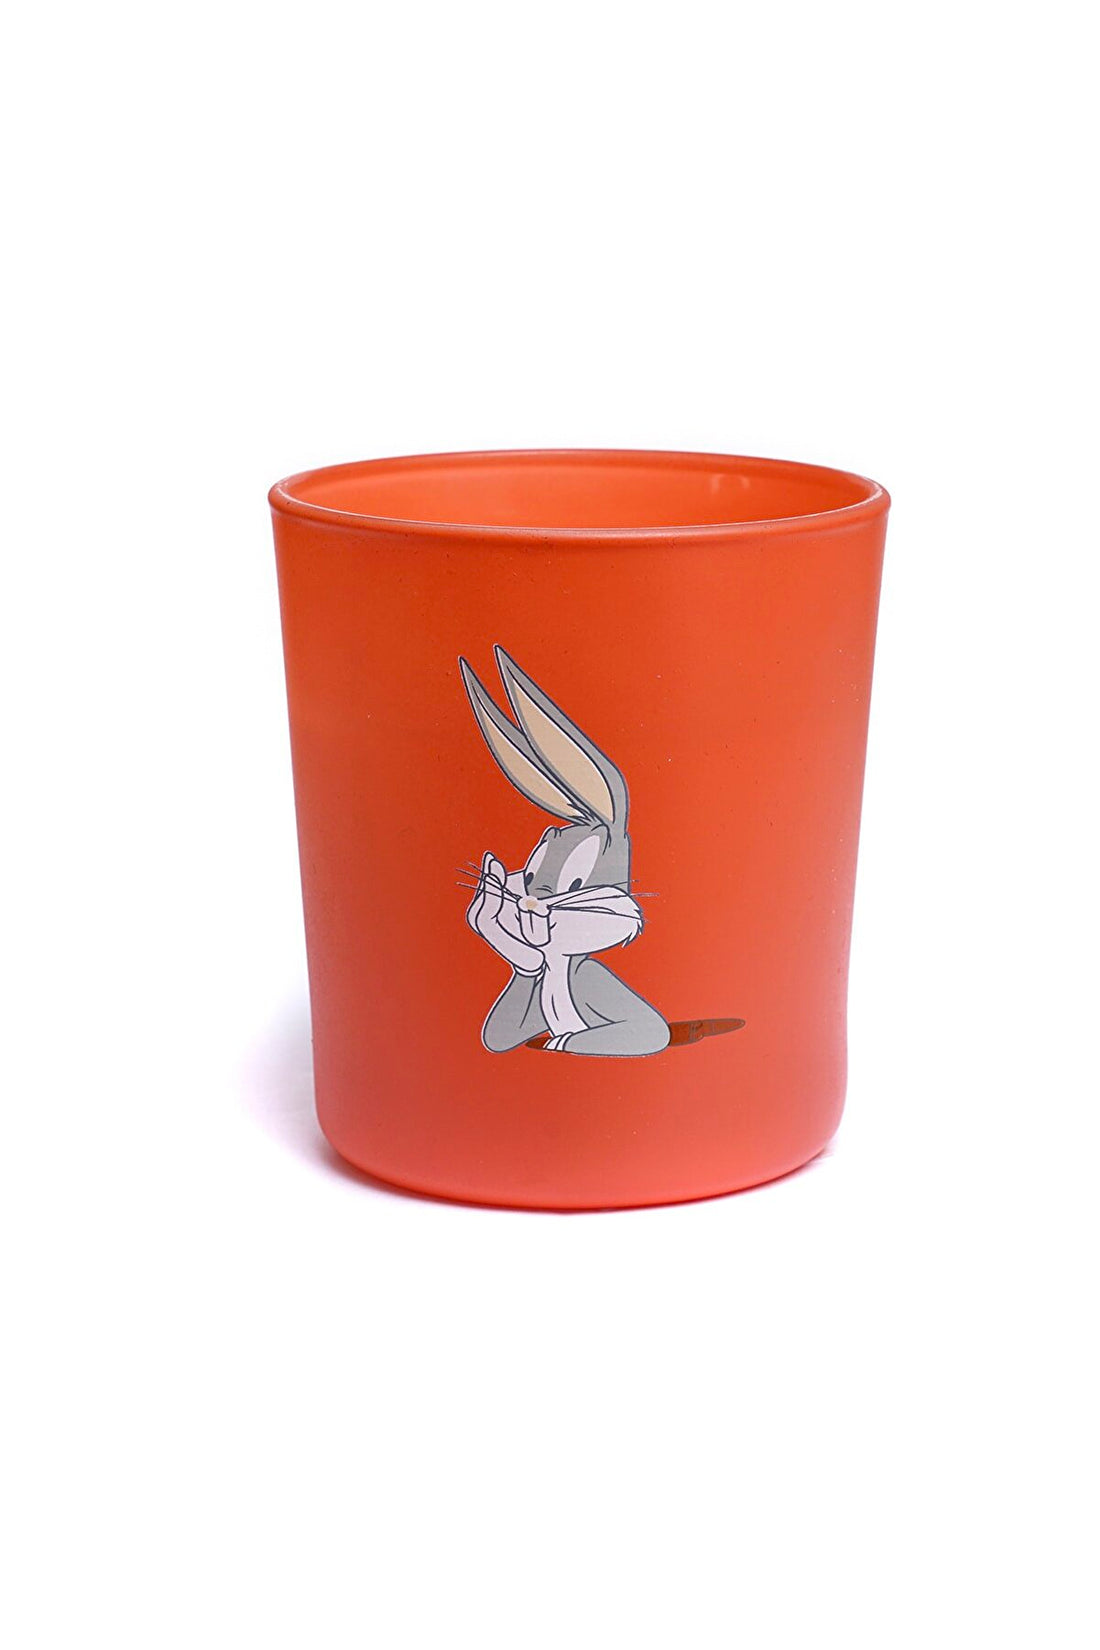 Looney Tunes Bugs Bunny - Lola Bunny Kokulu Mum